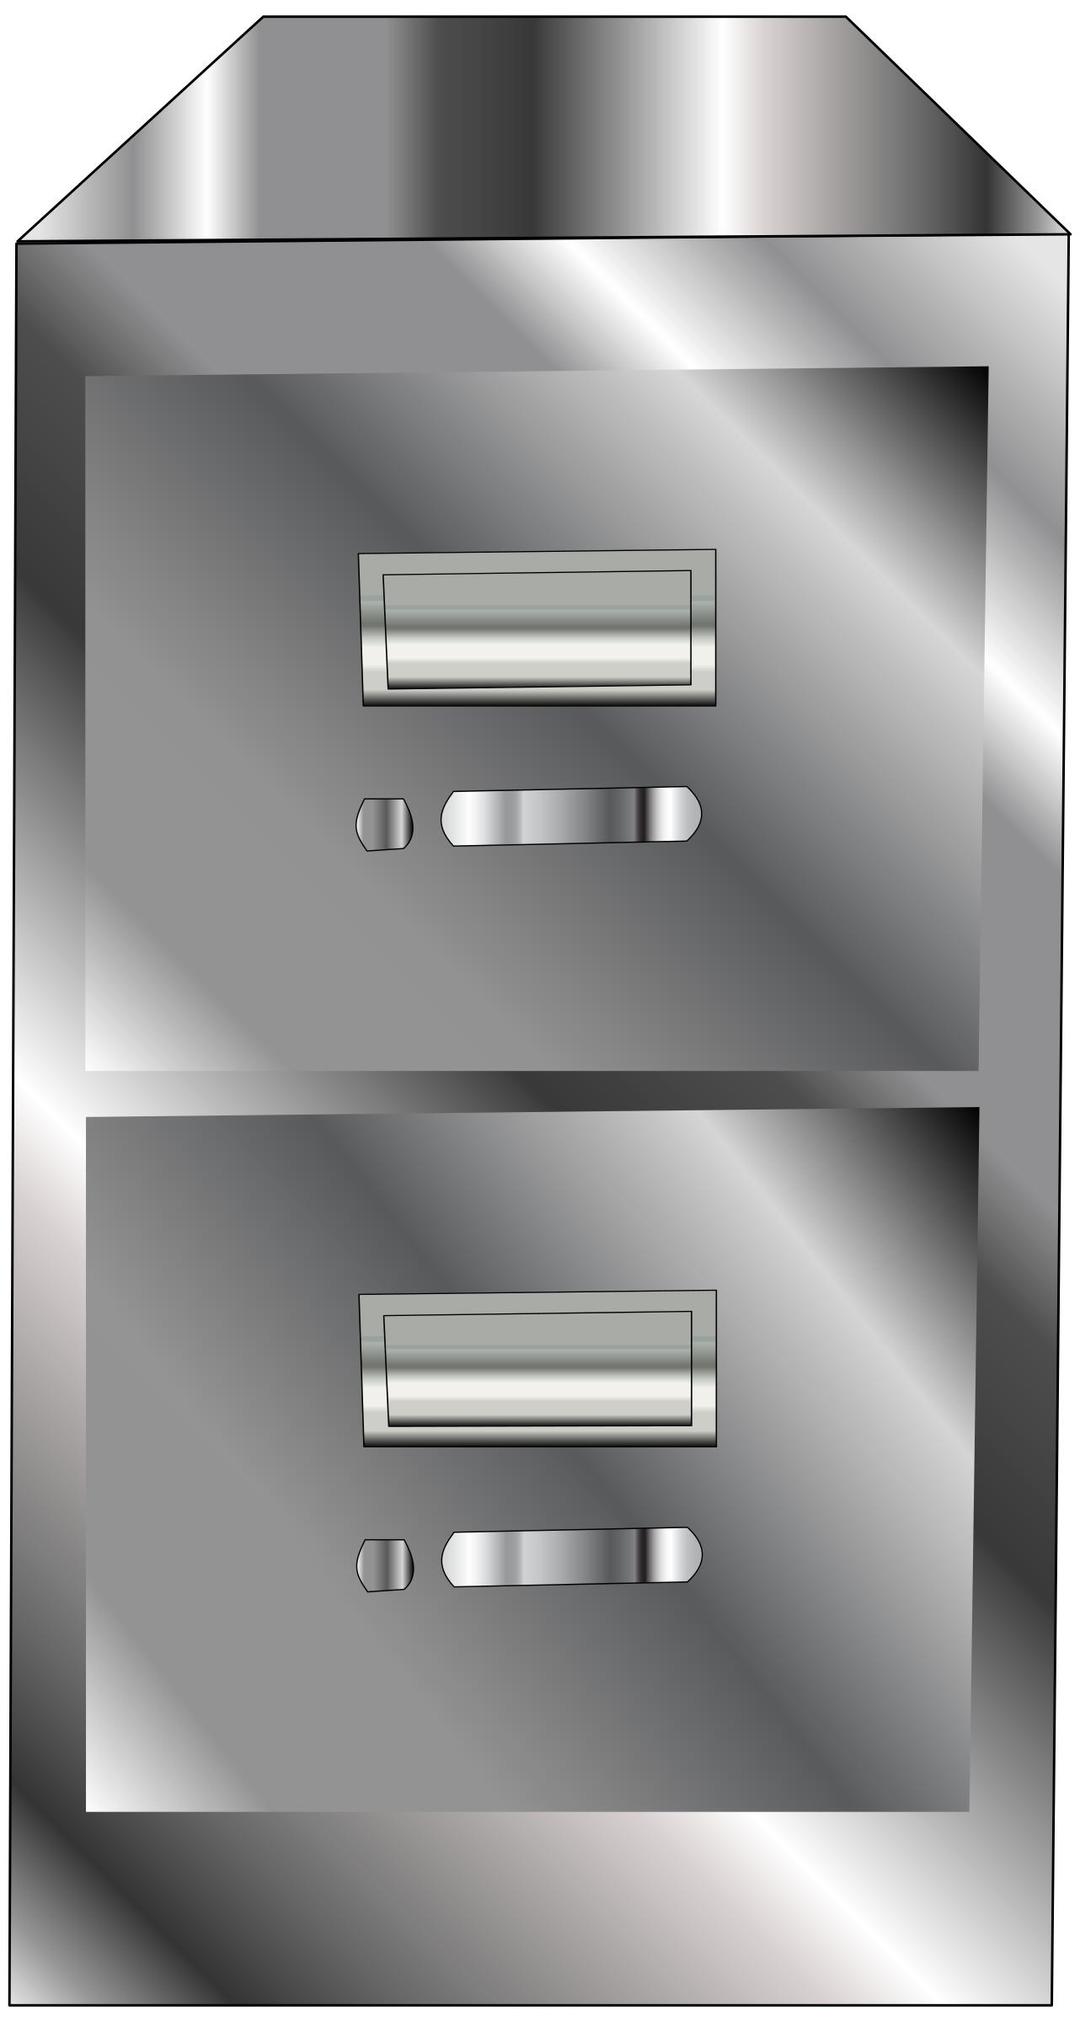 Metallic Filing Cabinet png transparent